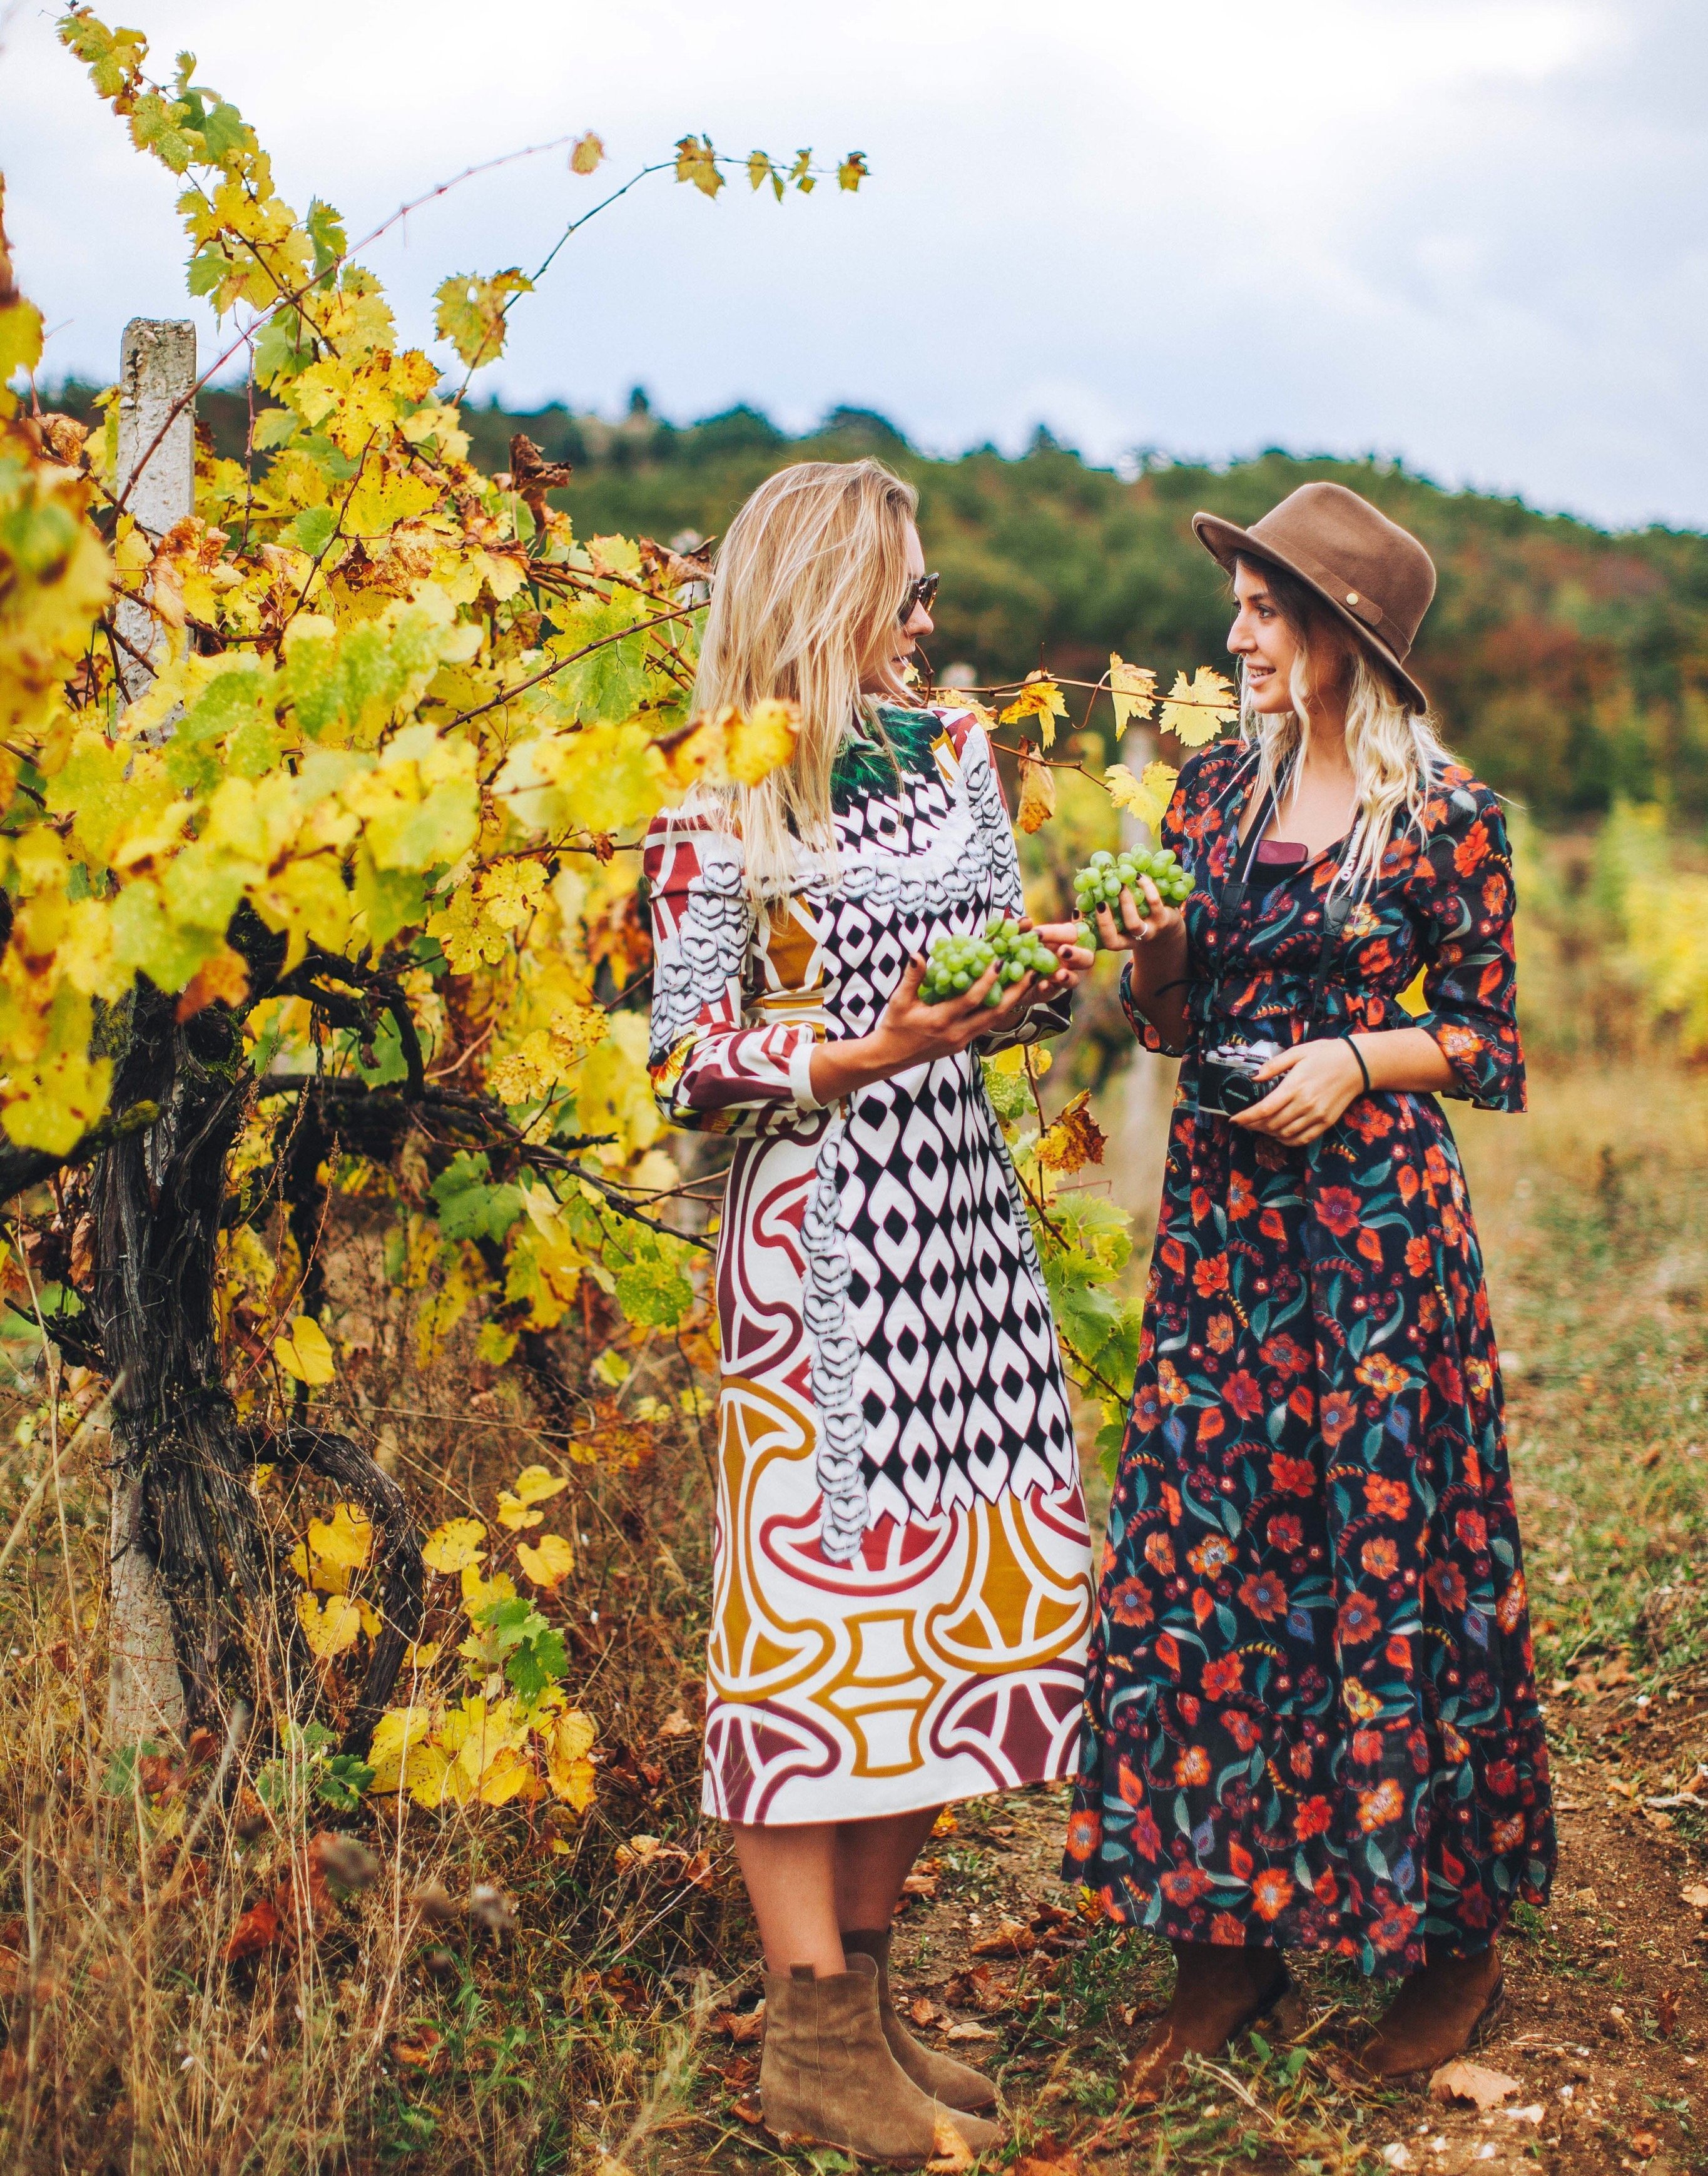 Girls in the vineyards